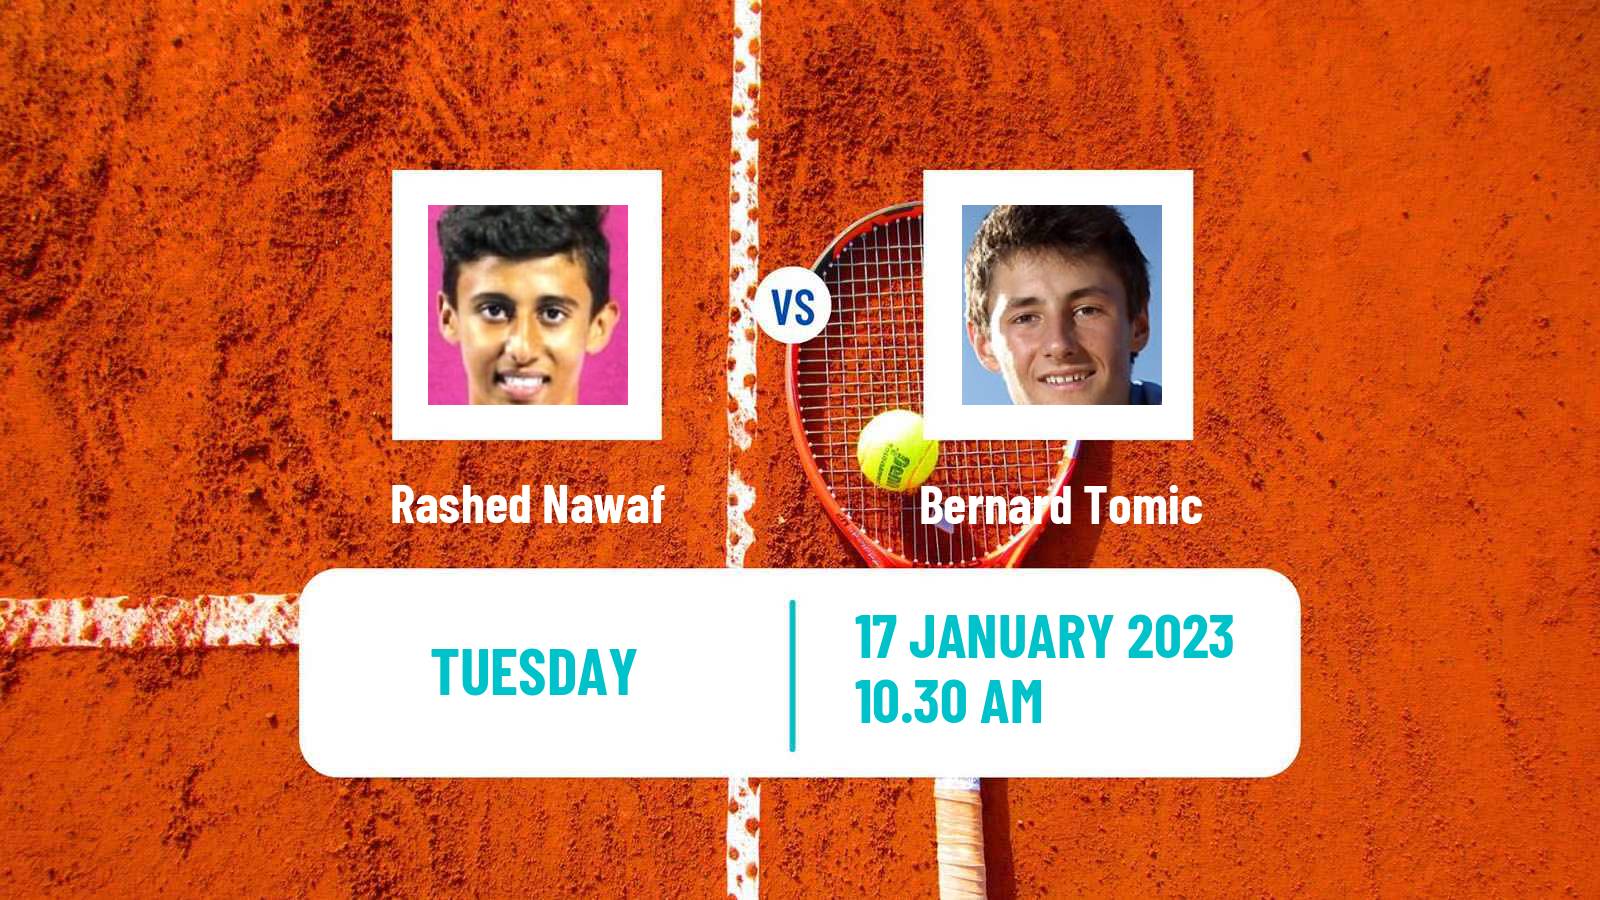 Tennis ITF Tournaments Rashed Nawaf - Bernard Tomic